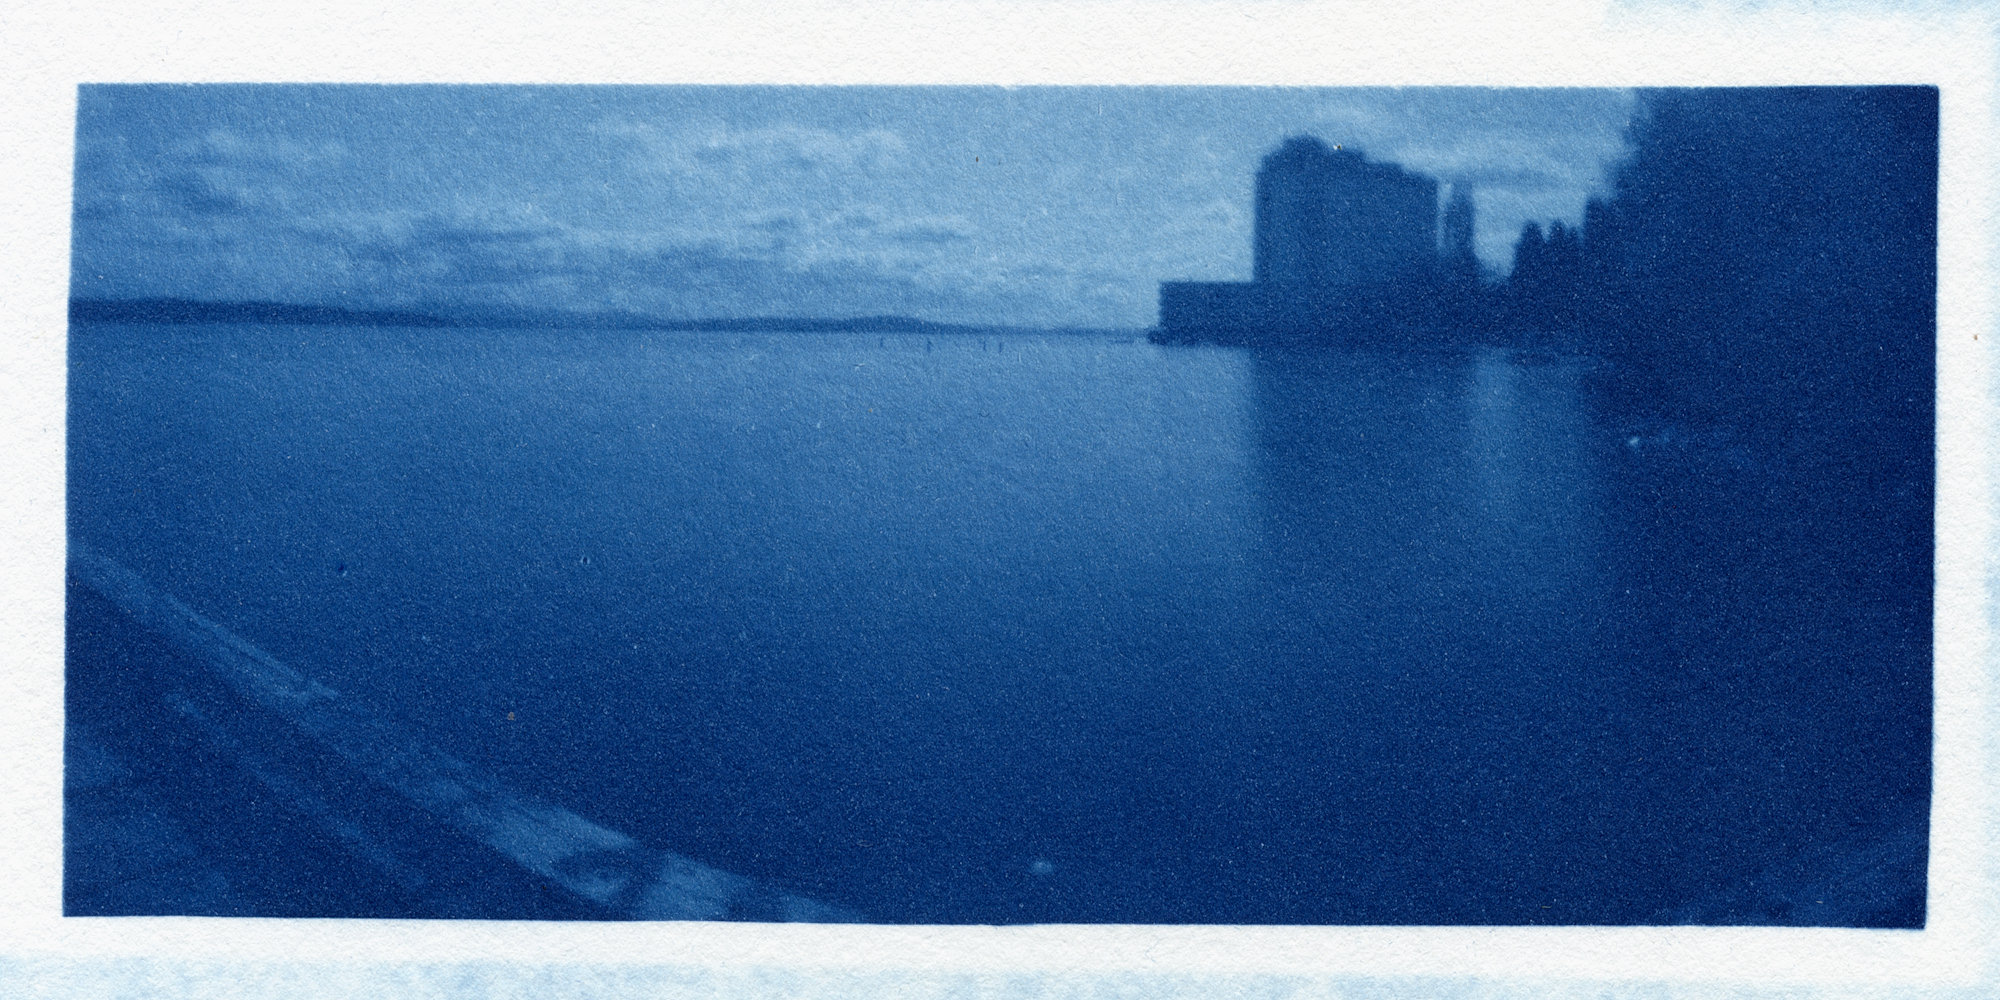 cyanotype from orthos plus negative